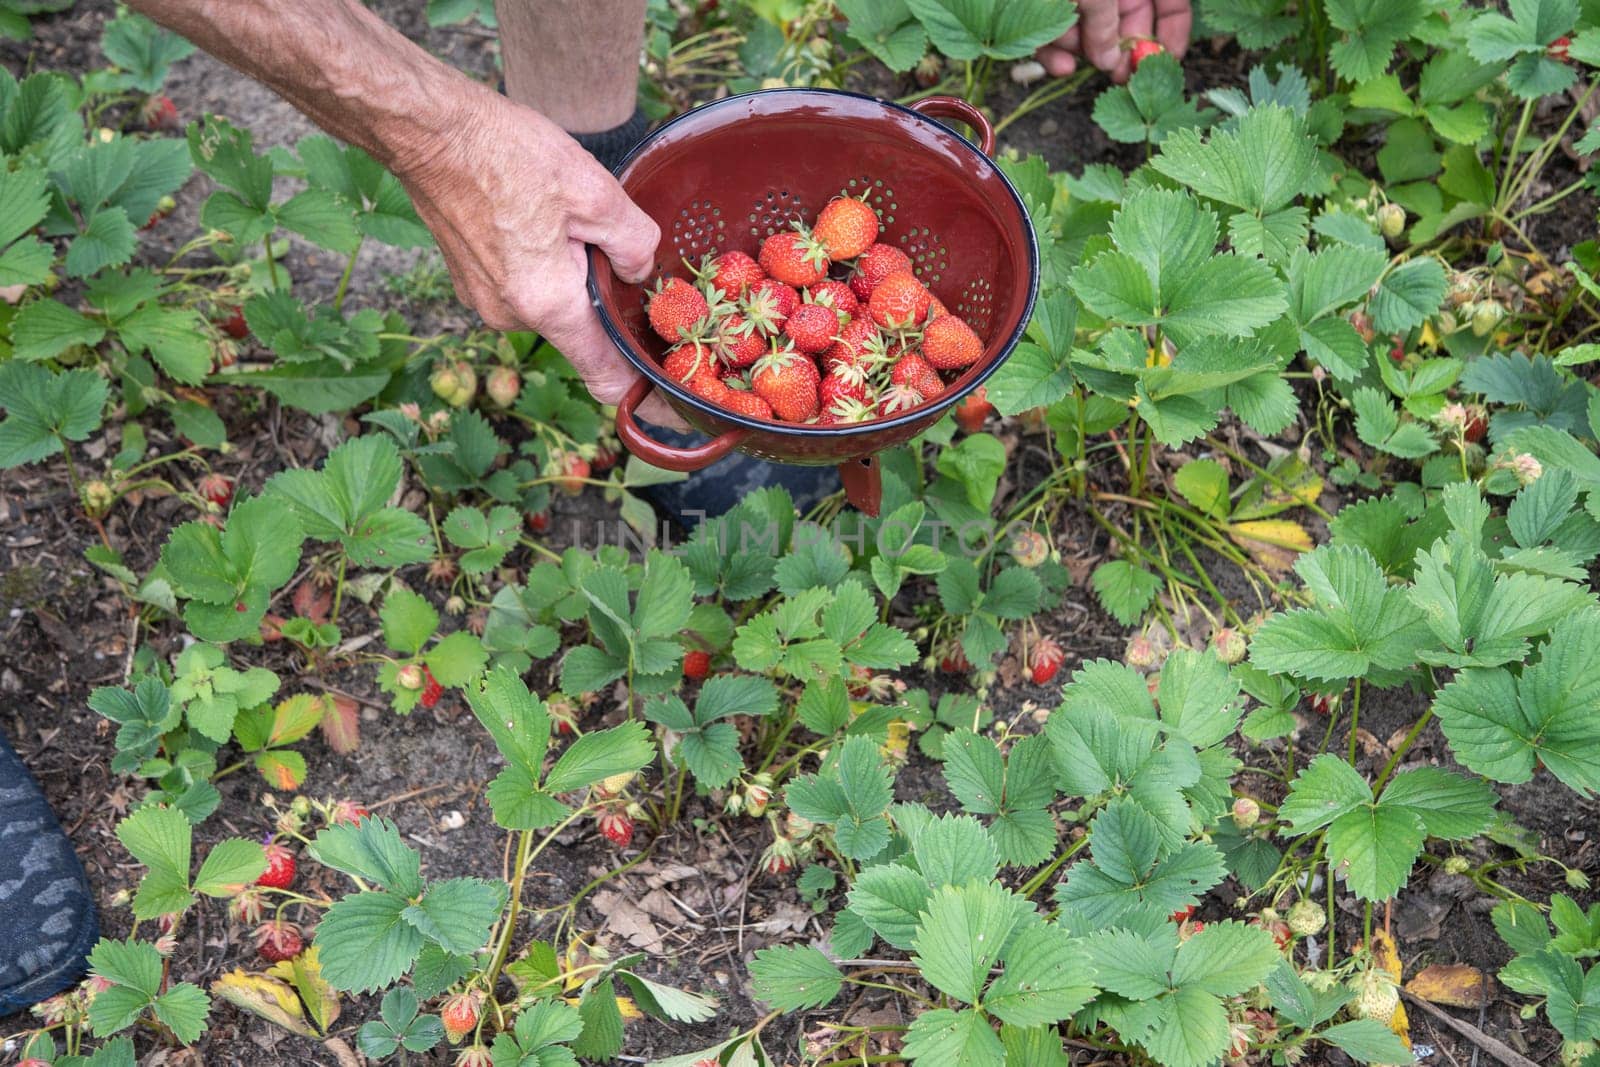 man picks strawberries in his palm, a summer harvest of berries, fruit picking, by KaterinaDalemans